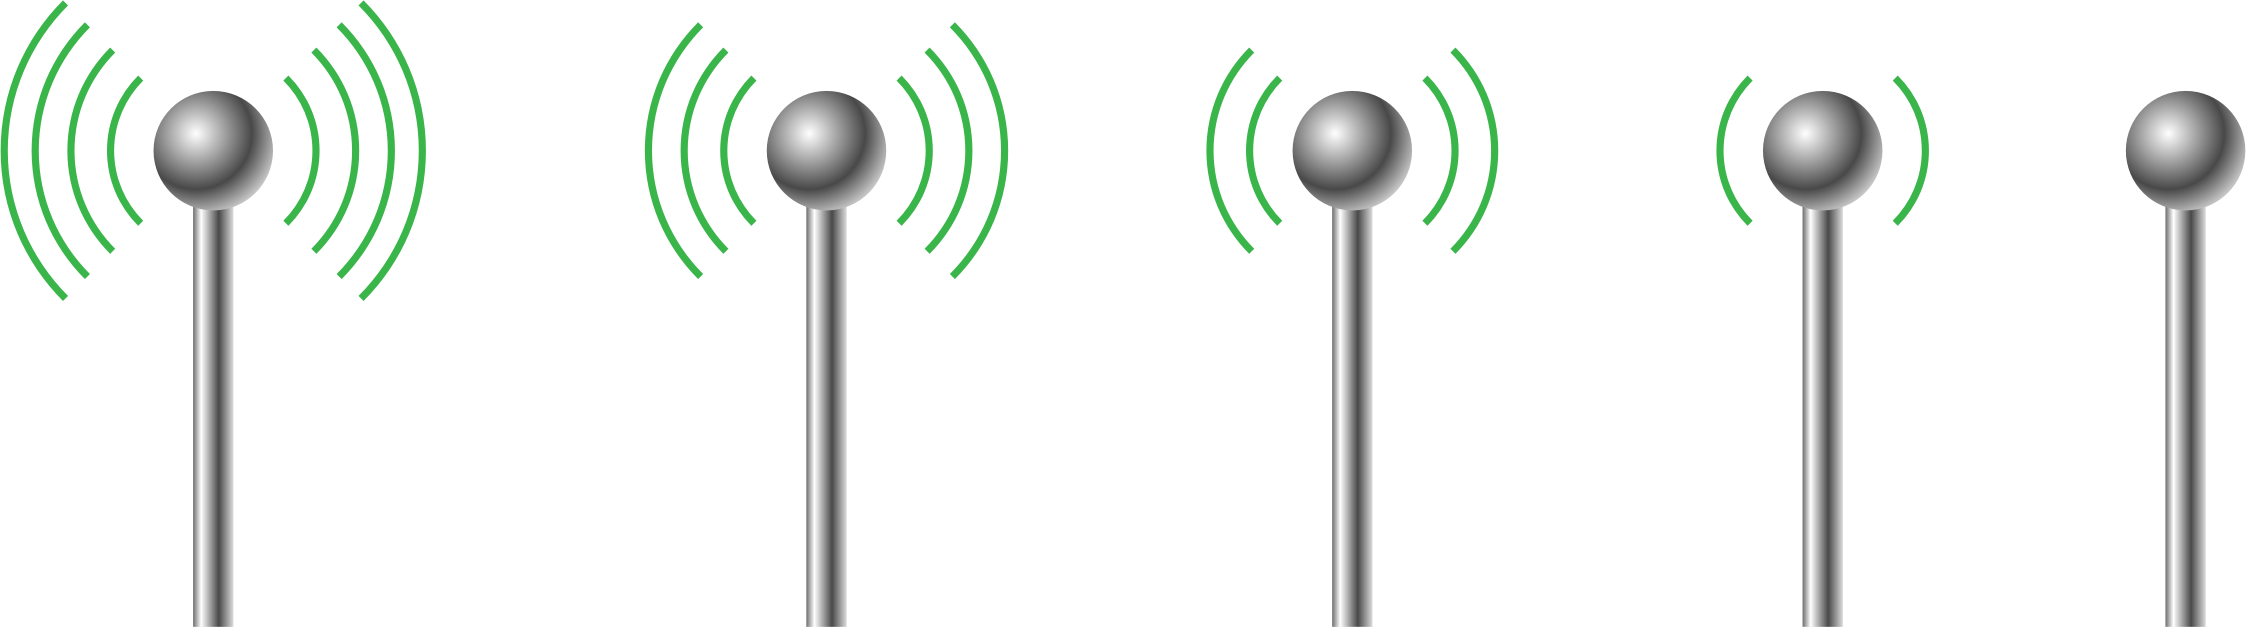 Wi-Fi Signal Icons SVG Clip arts